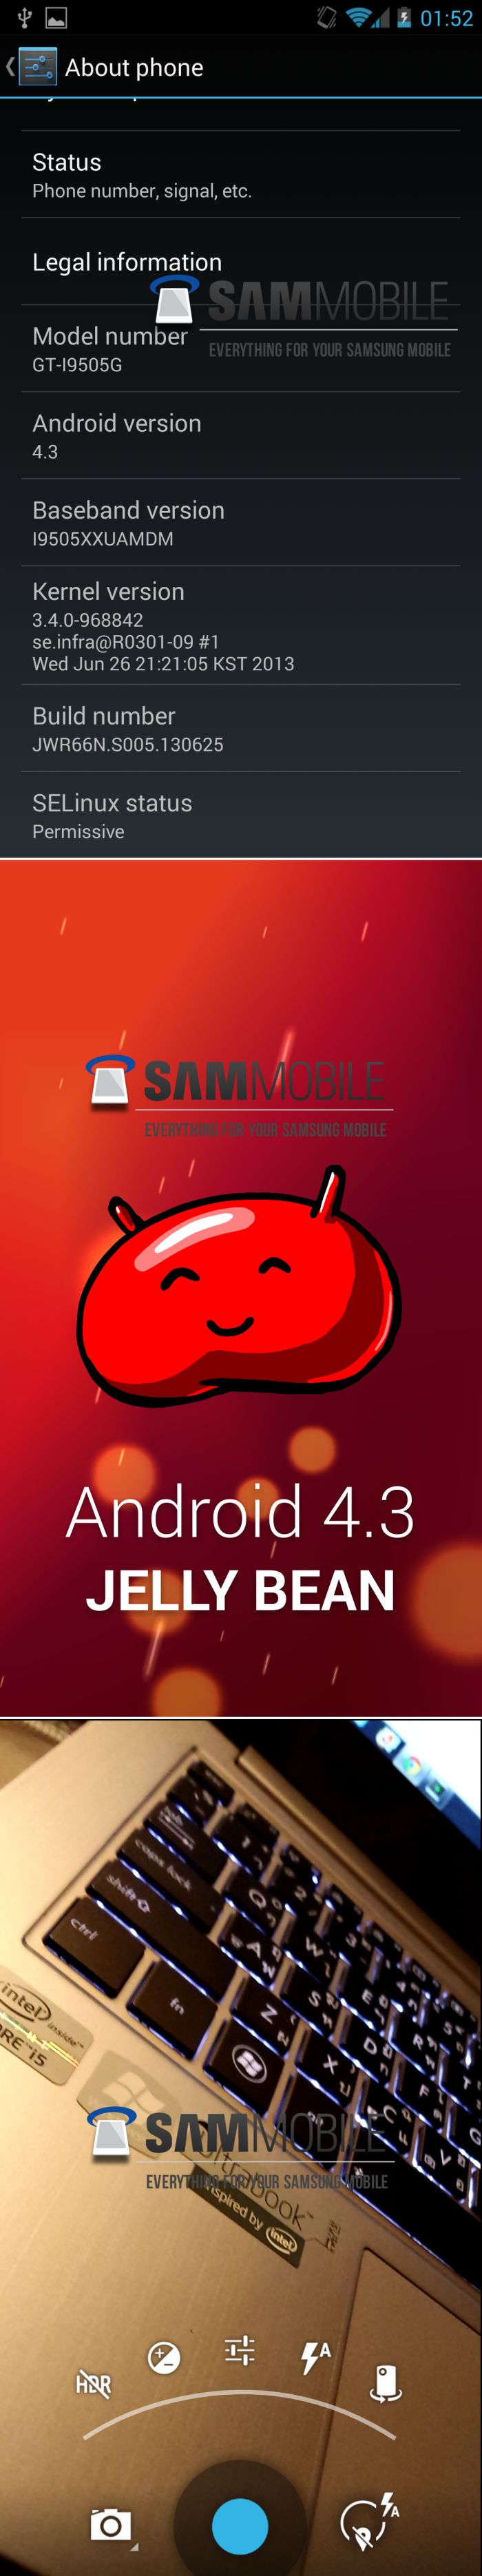 Android 4.3 a Galaxy S4 Google Edition-ön!